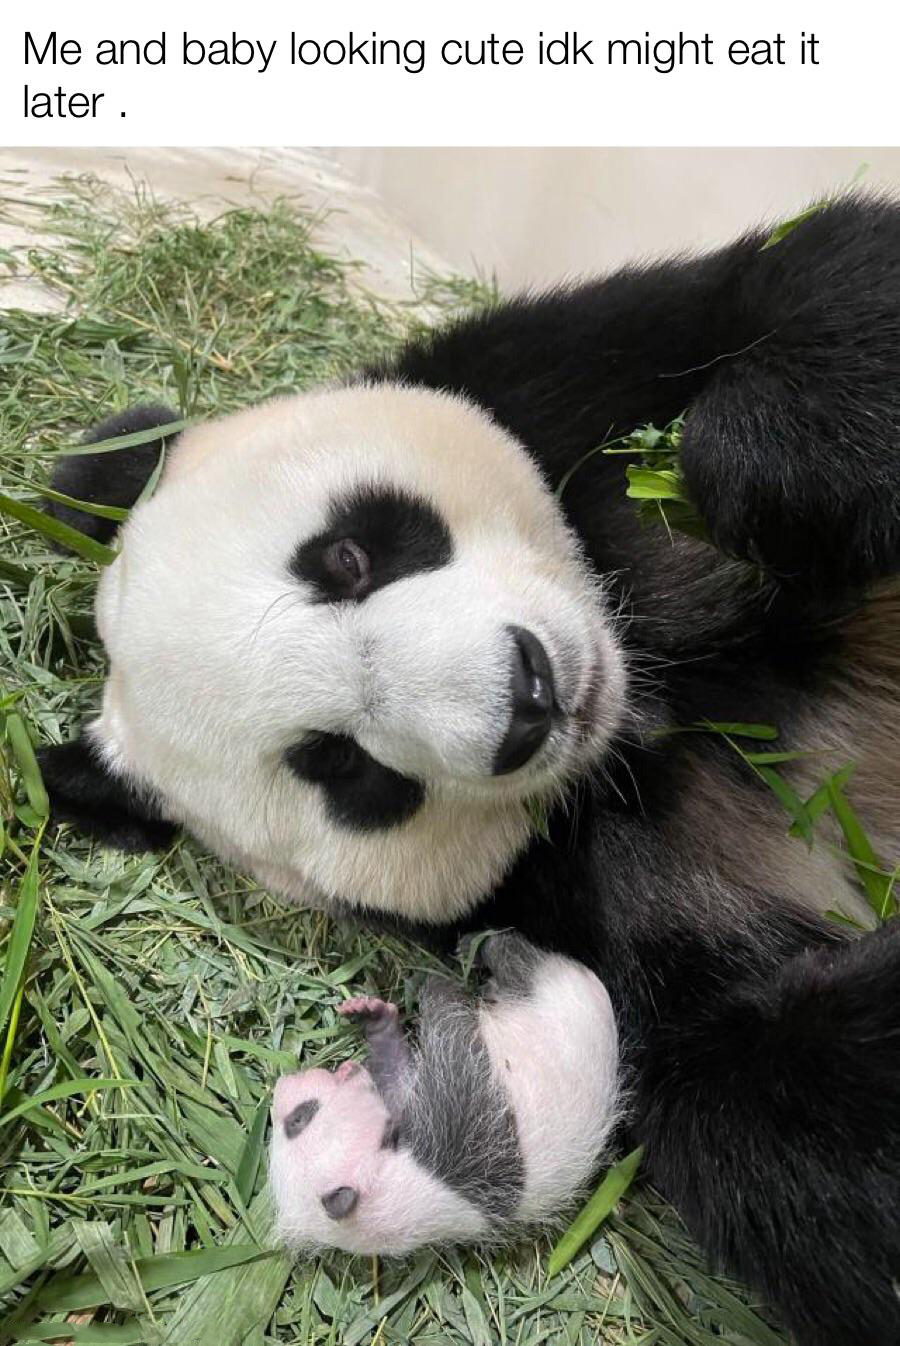 dank memes - panda cub singapore - Me and baby looking cute ick might eat it later.